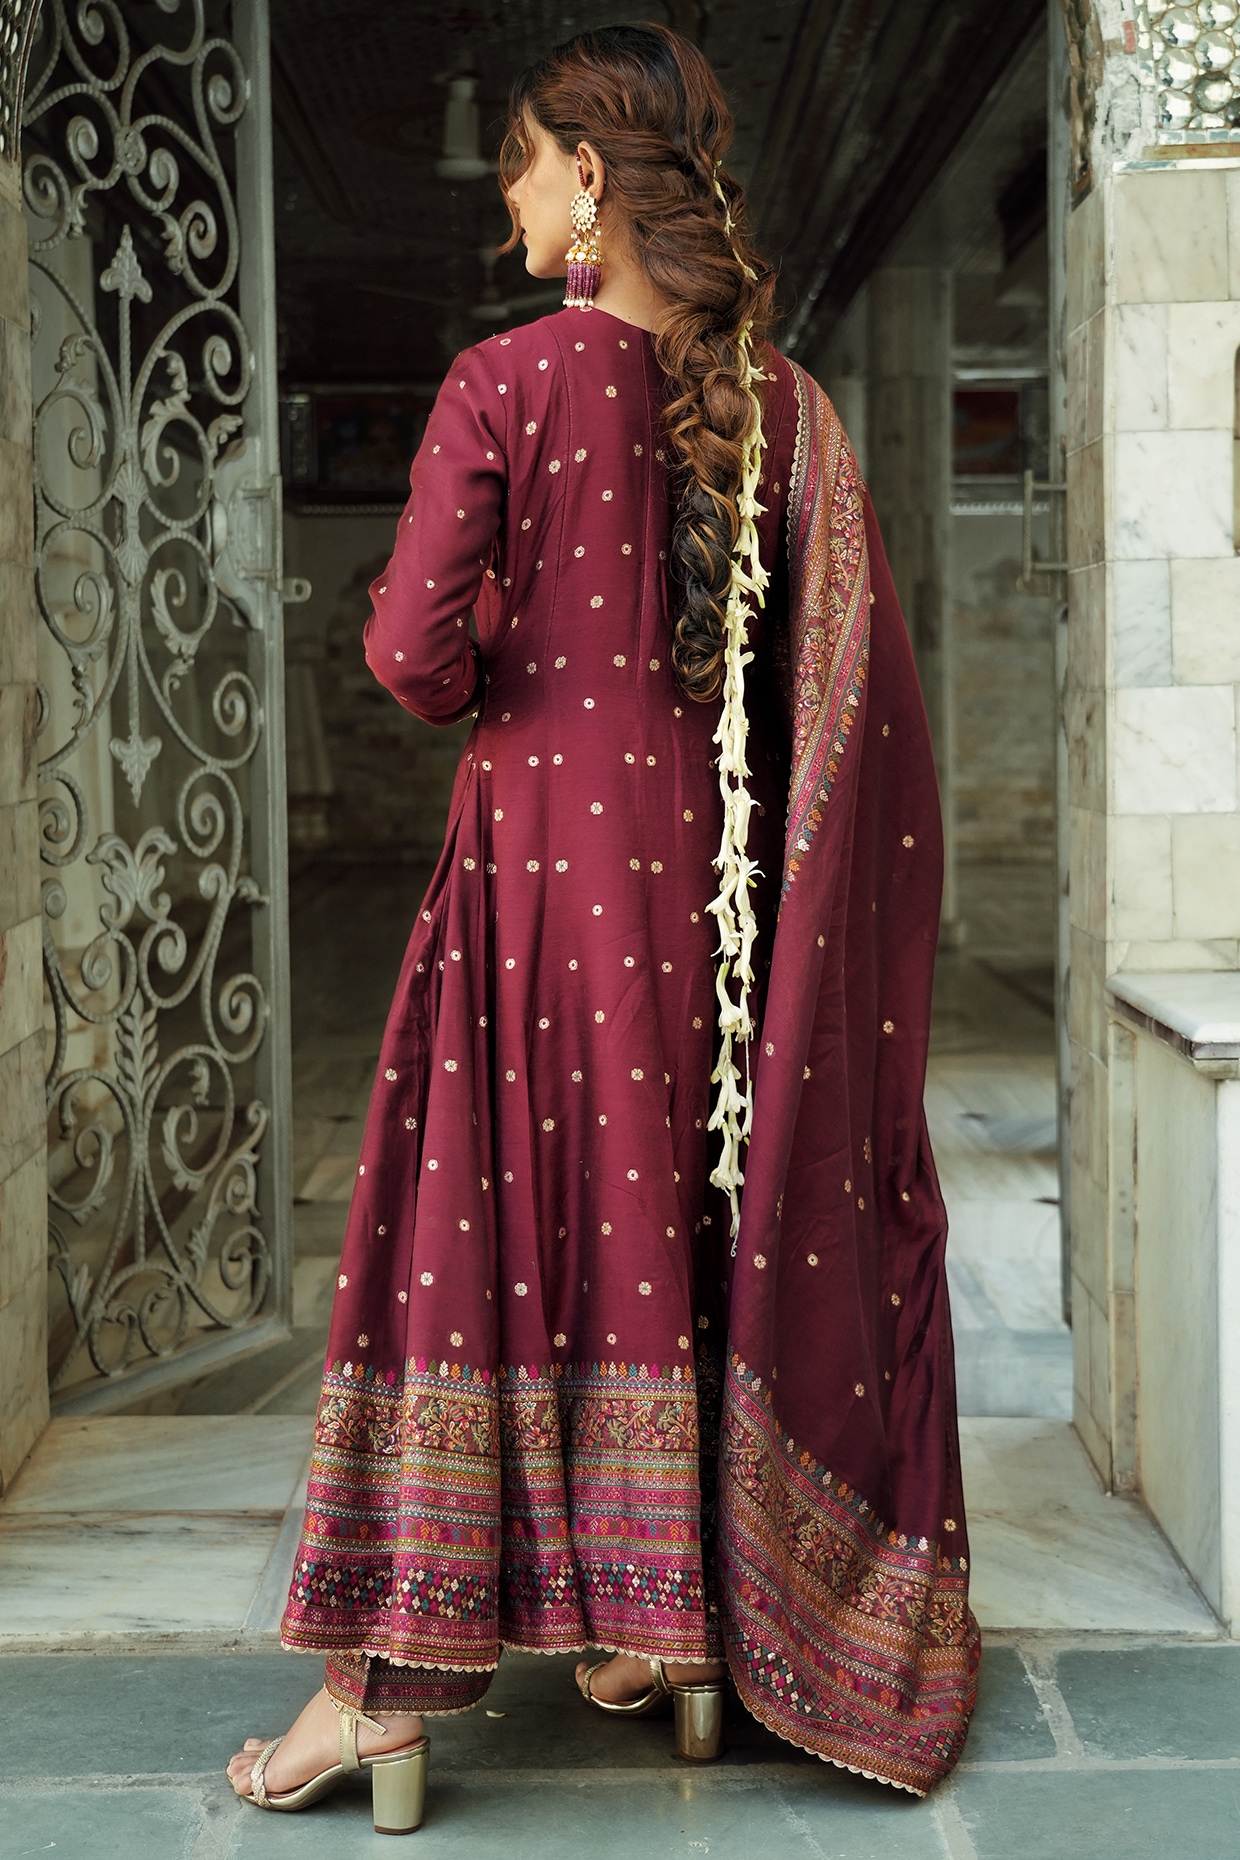 Maroon Embroidered Bangalori Silk Anarkali suit with Dupatta - Mirraw -  2629139 | Indian outfits, Indian fashion, Pakistani fashion